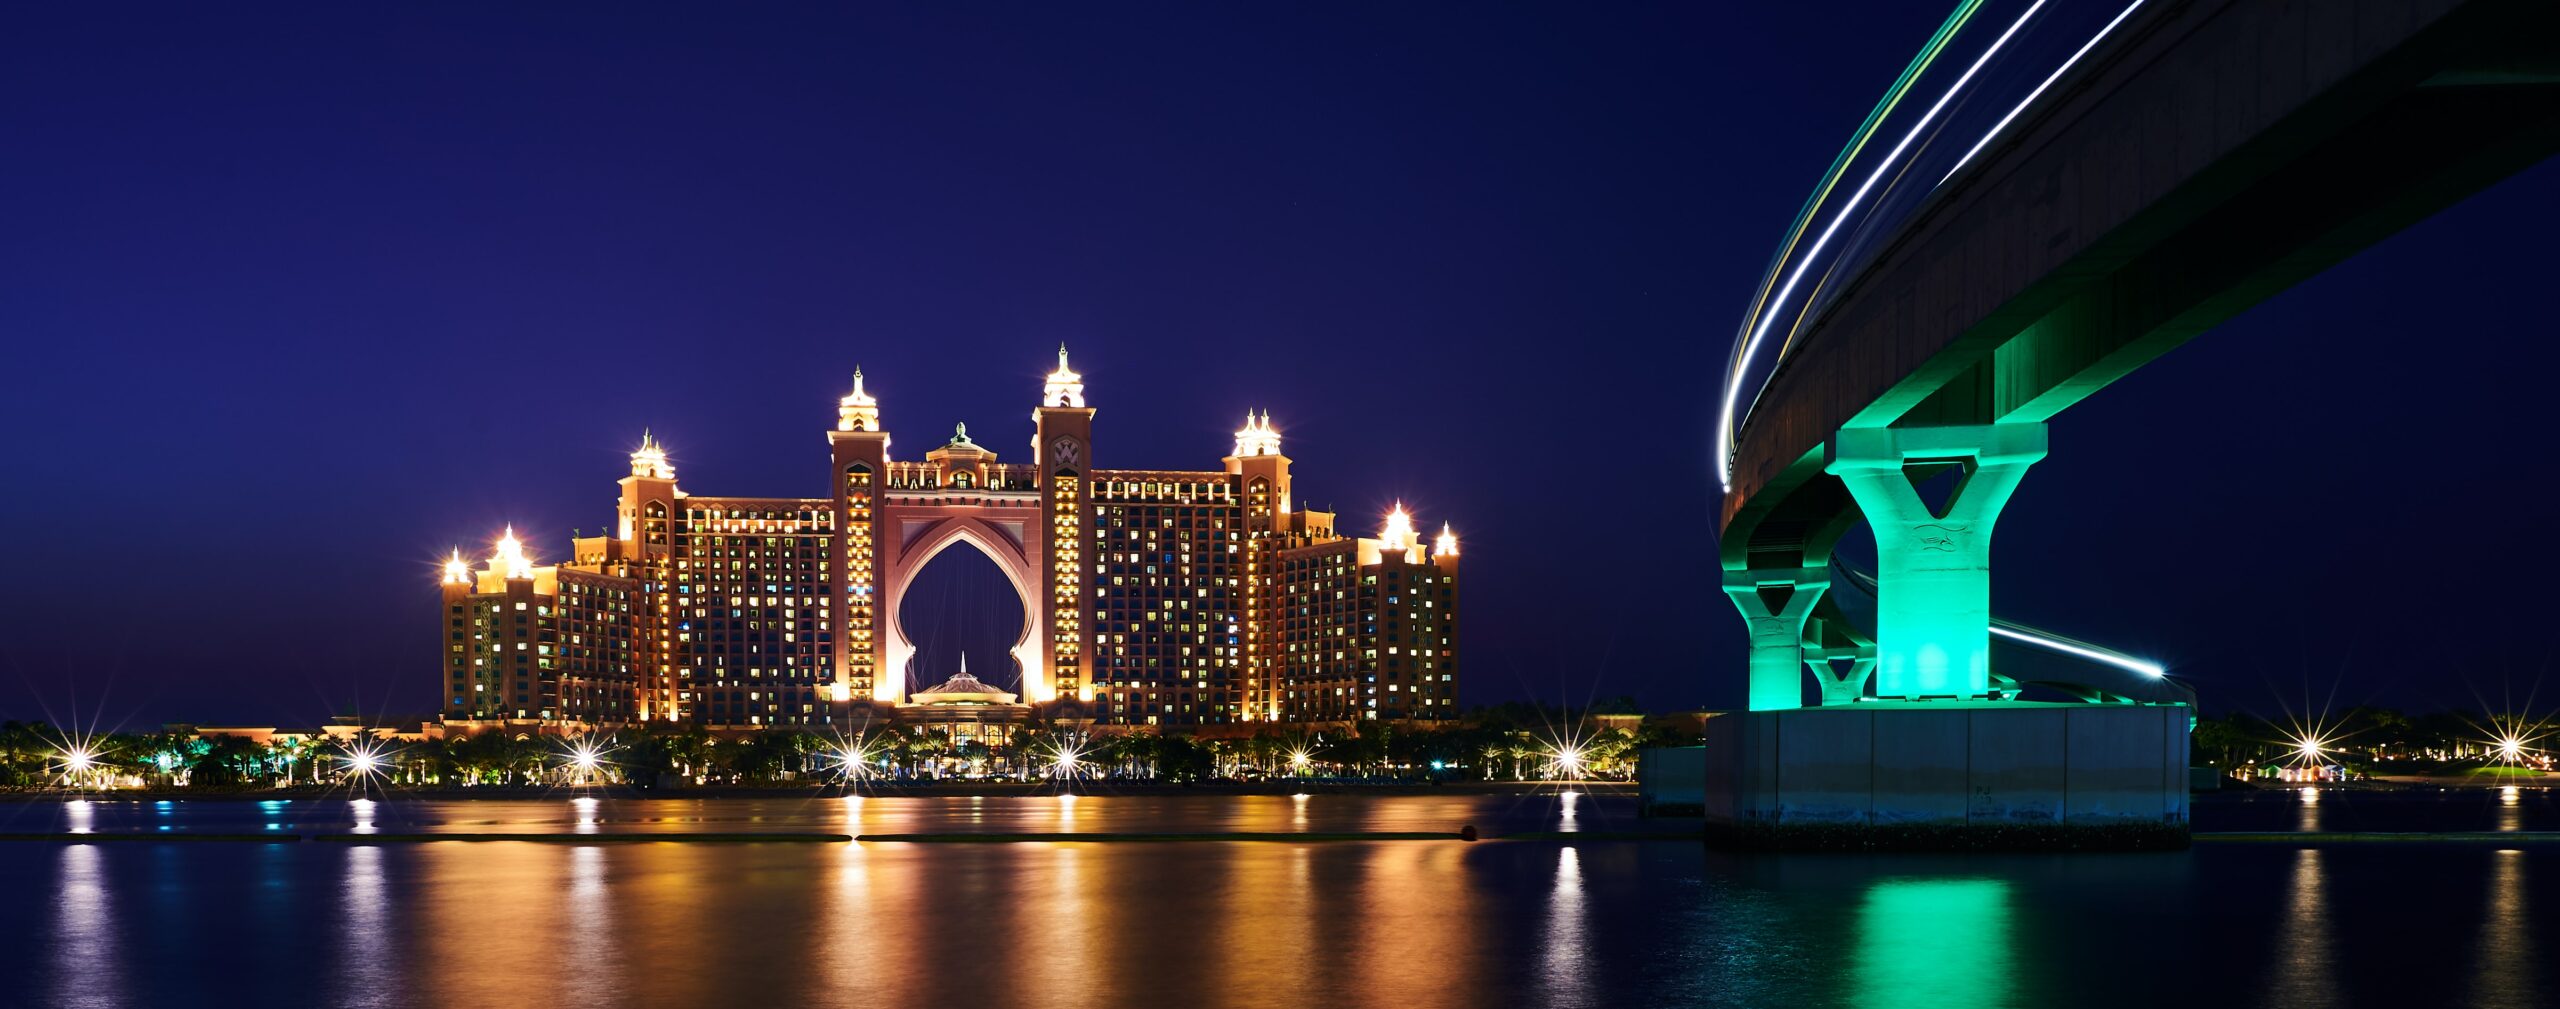 Check Out Atlantis Hotel On Our Dubai Night Tour & Dhow Cruise Dinner